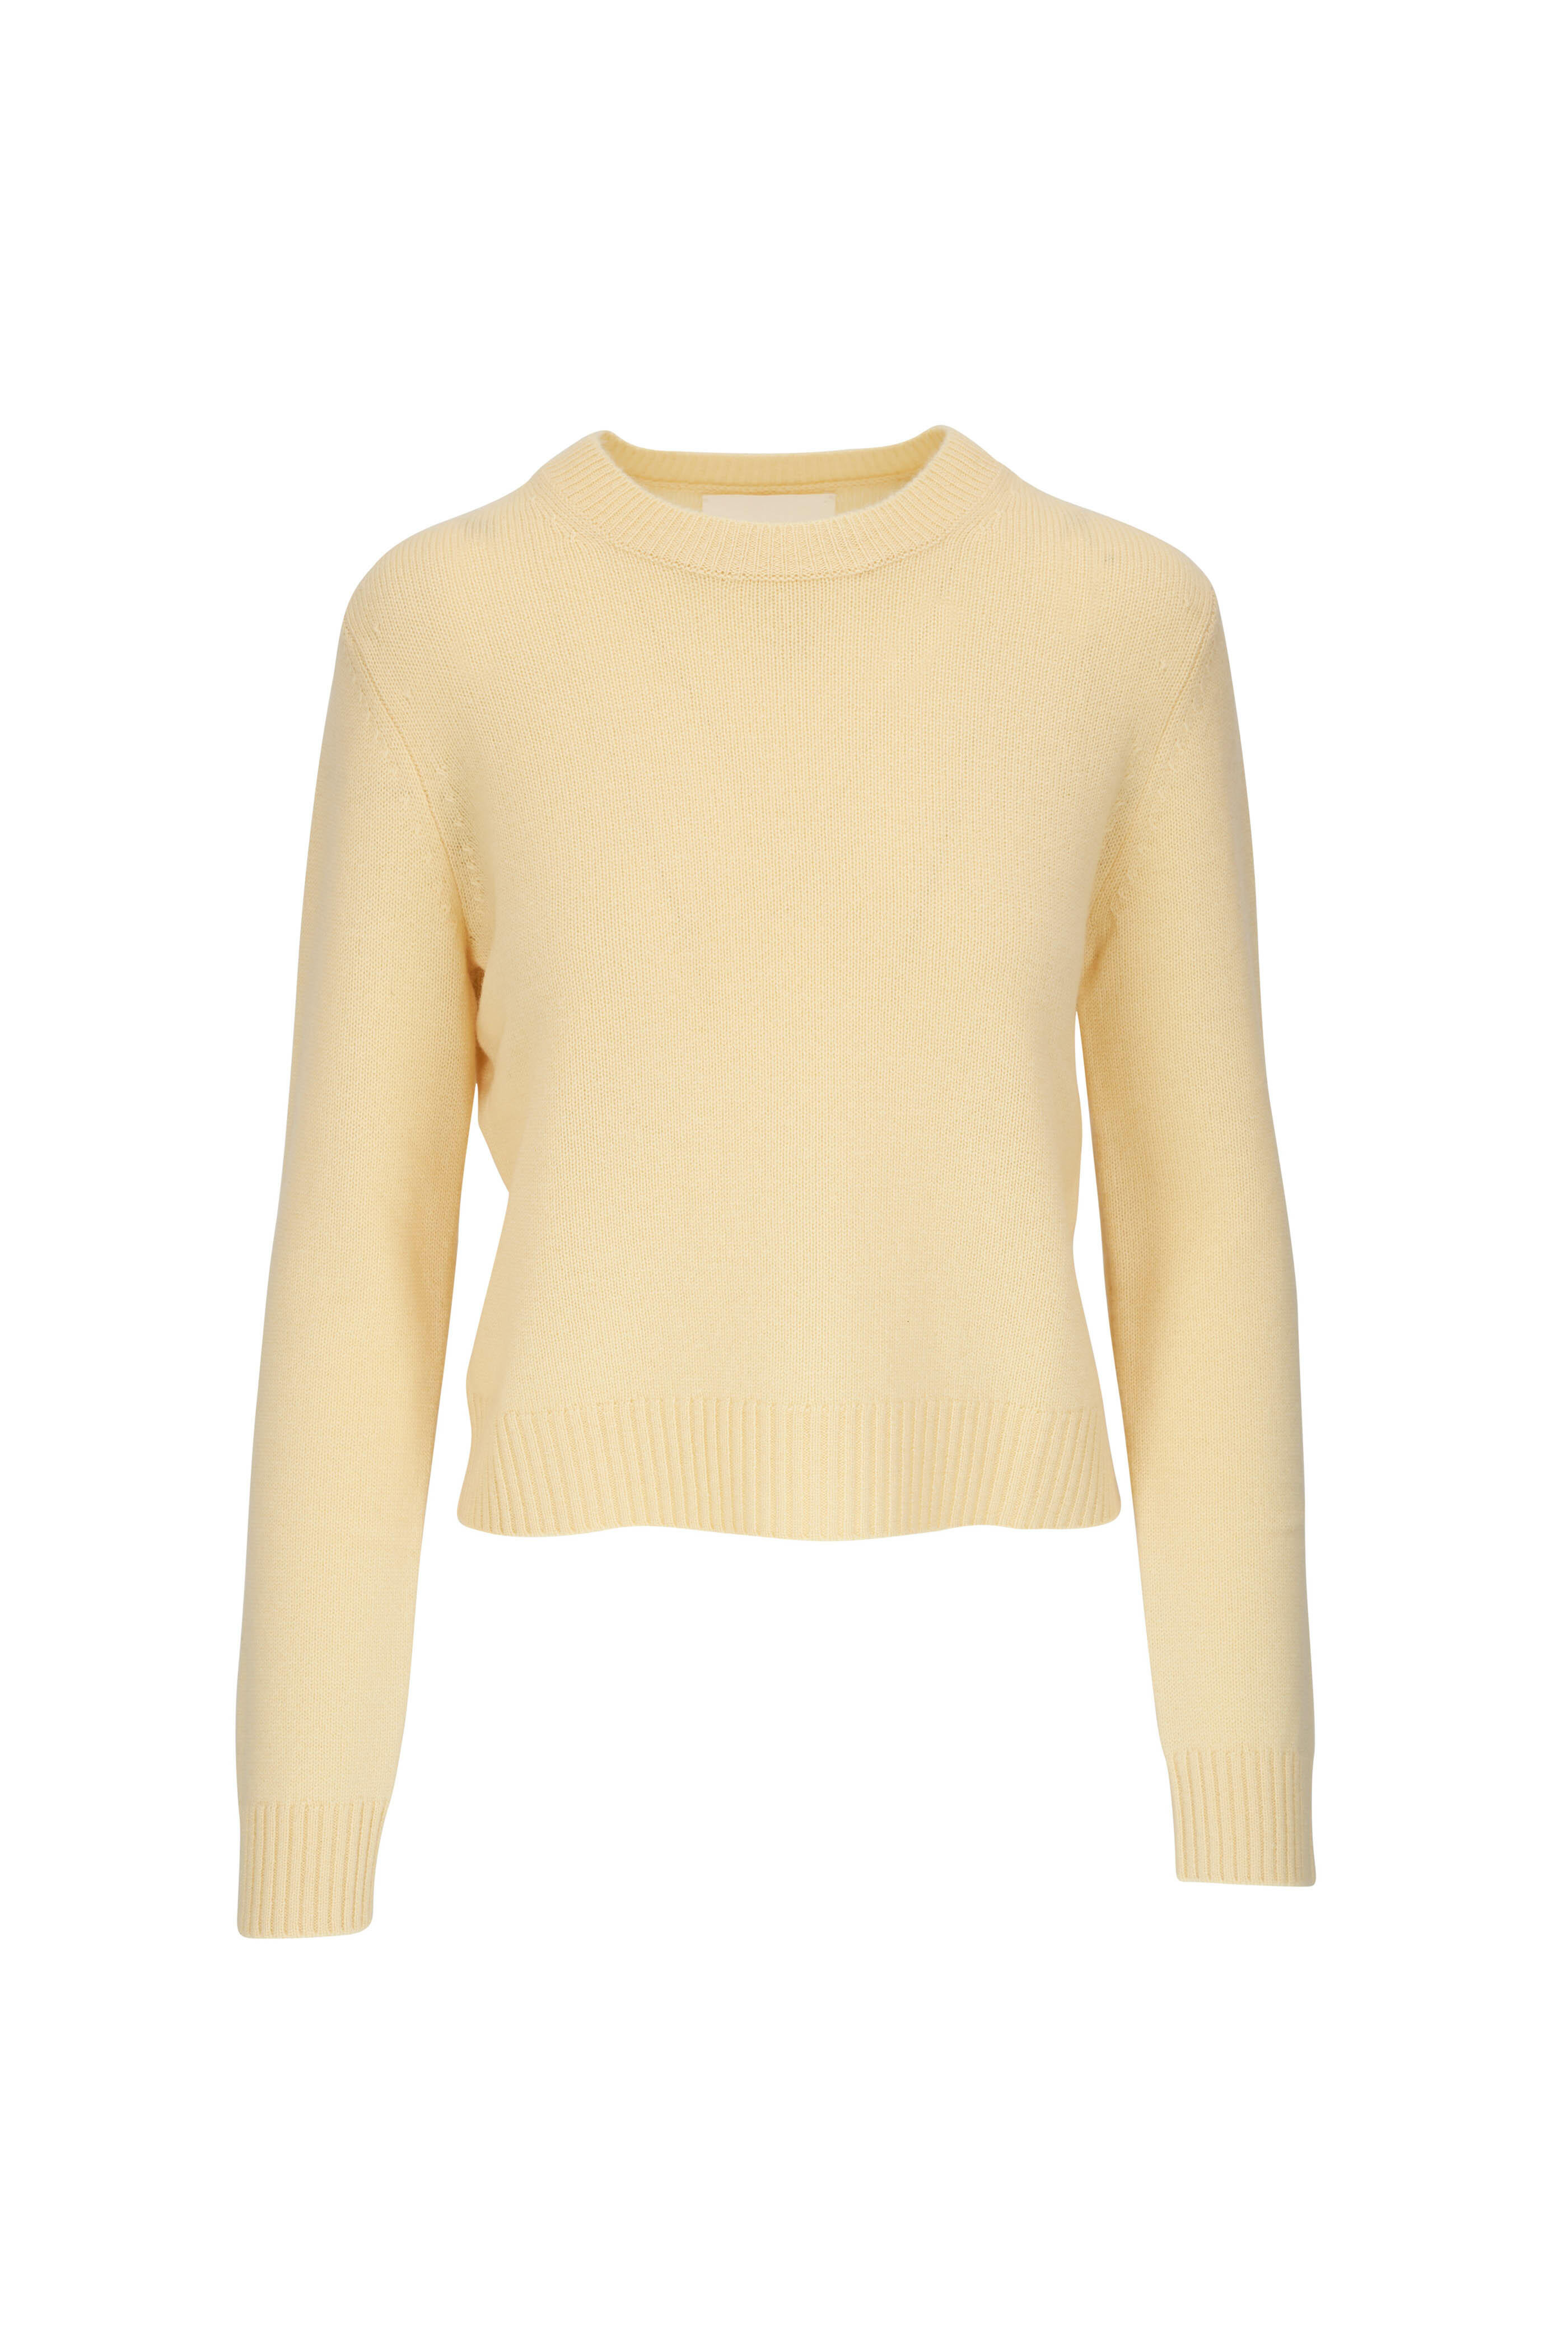 Lisa Yang - Marble Lemon Crewneck Cashmere Sweater